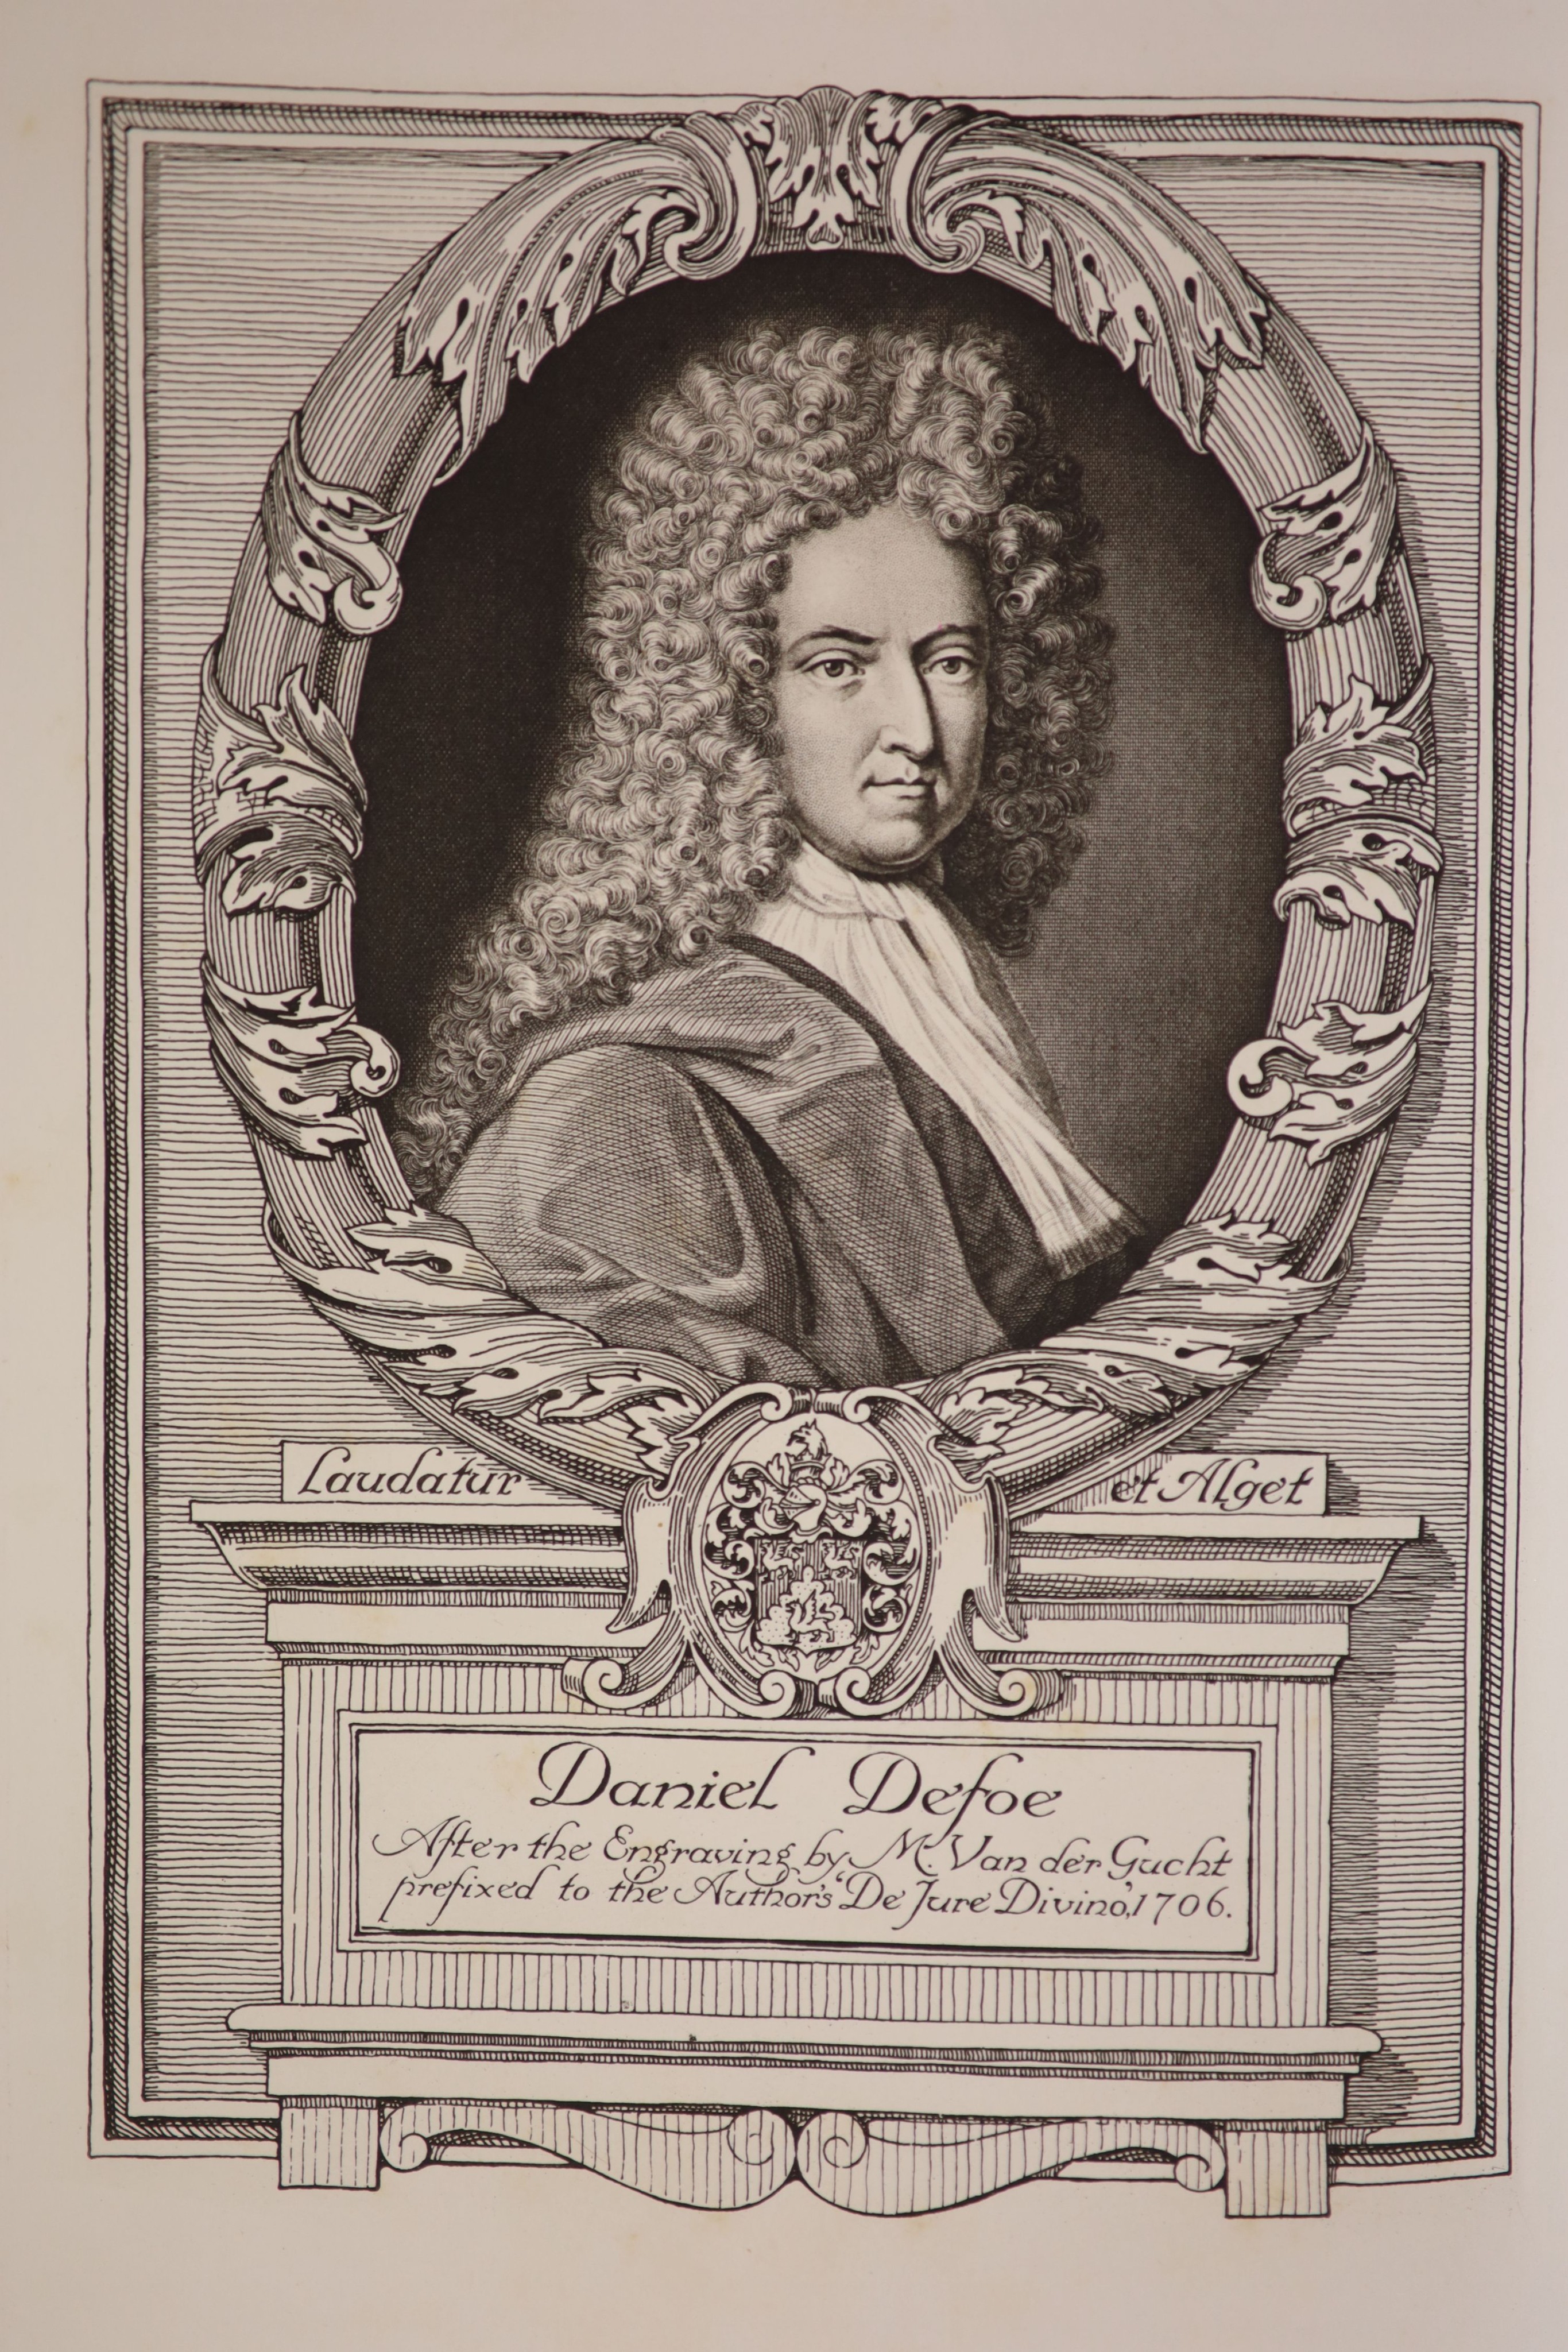 Defoe, Daniel - A Tour thro’ London about the year 1725, folio, calf, B.T. Batsford, London, 1929, with slip case